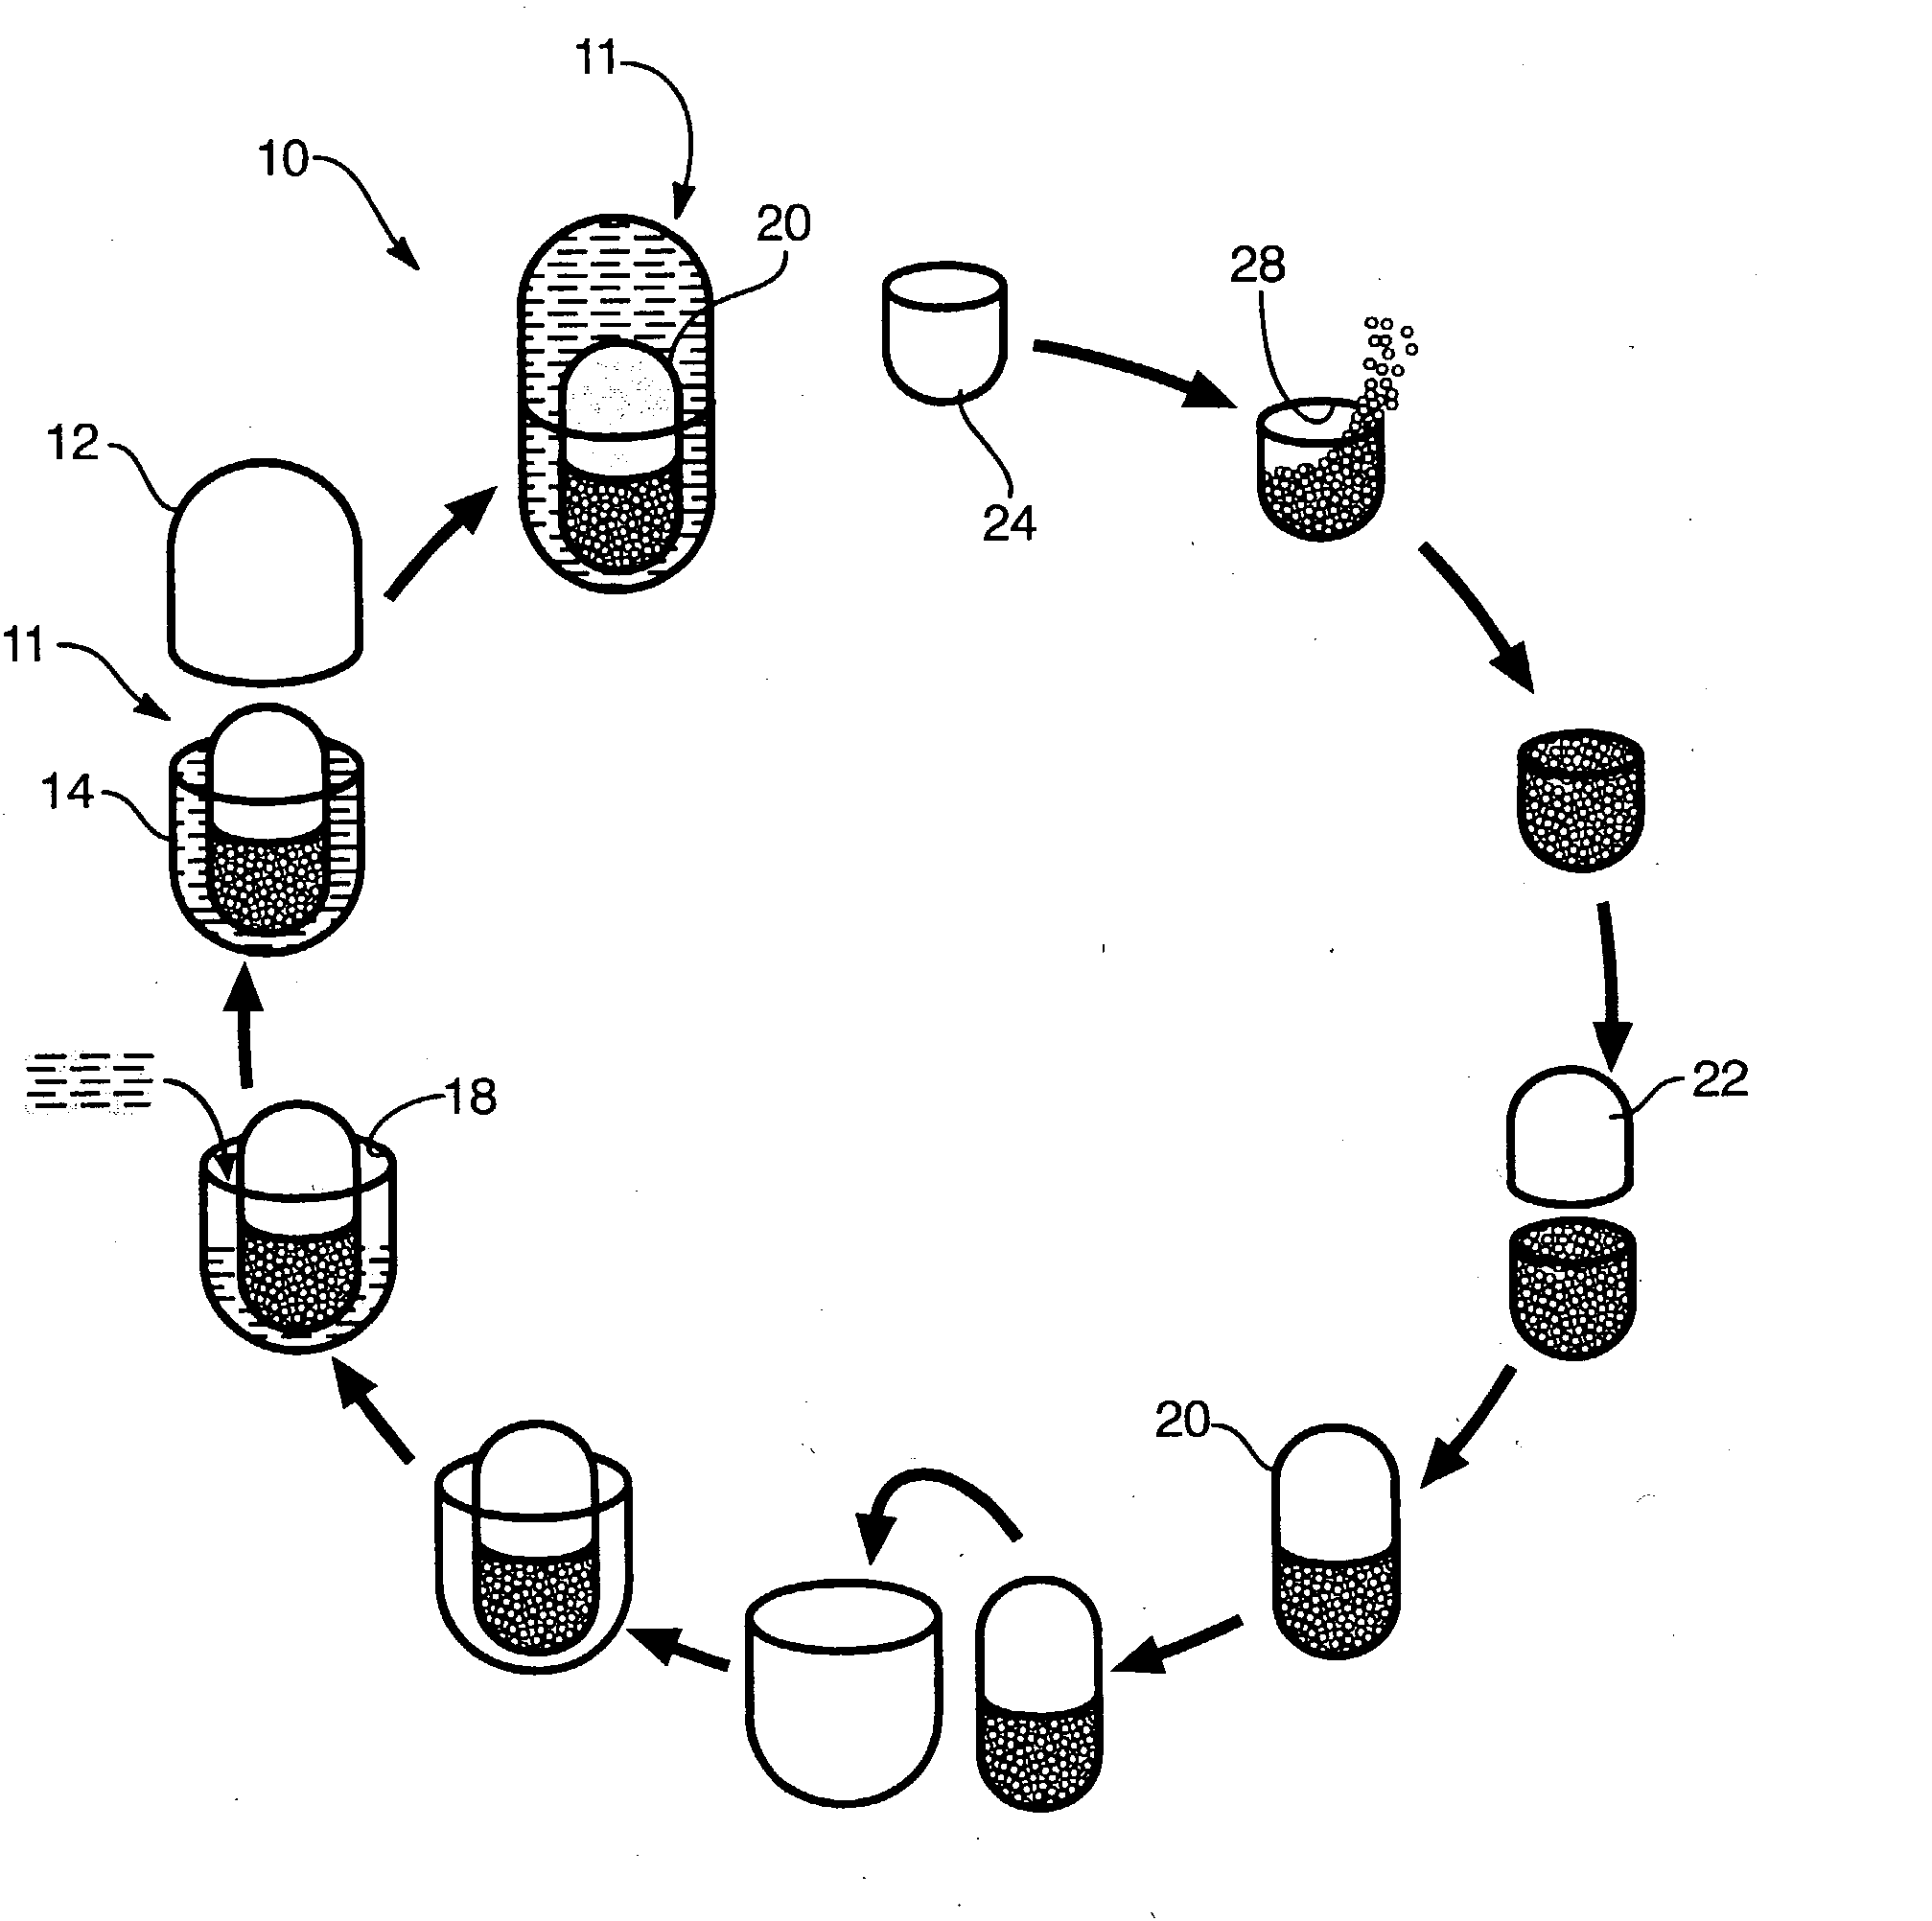 Process for encapsulating multi-phase, multi-compartment capsules